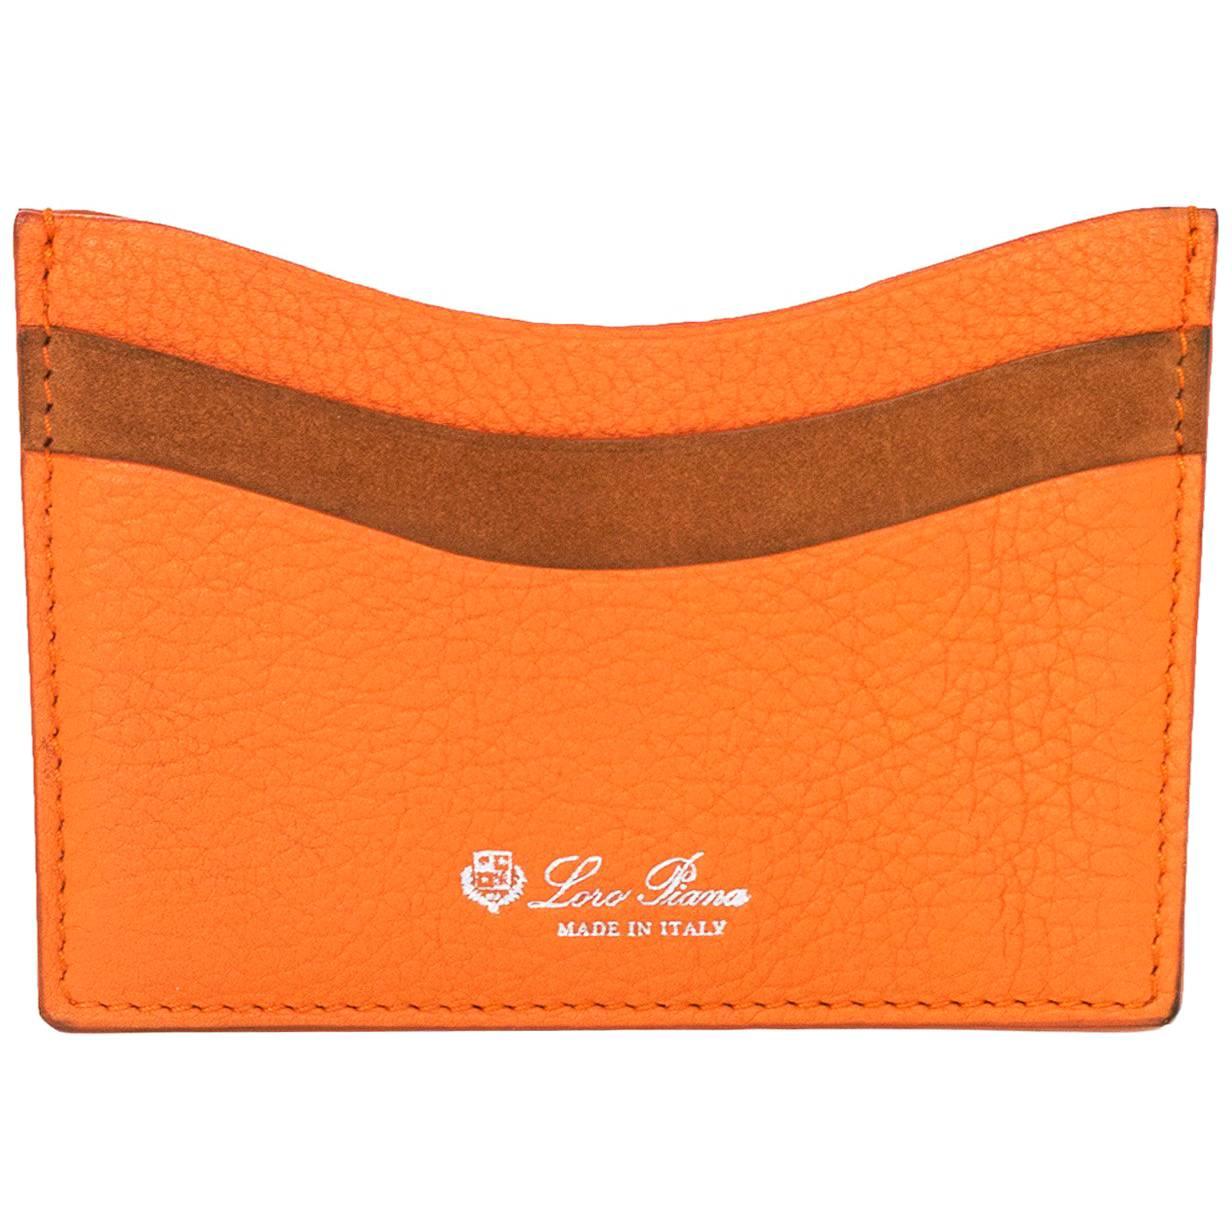 Loro Piana Orange Leather & Suede Card Holder rt. $300